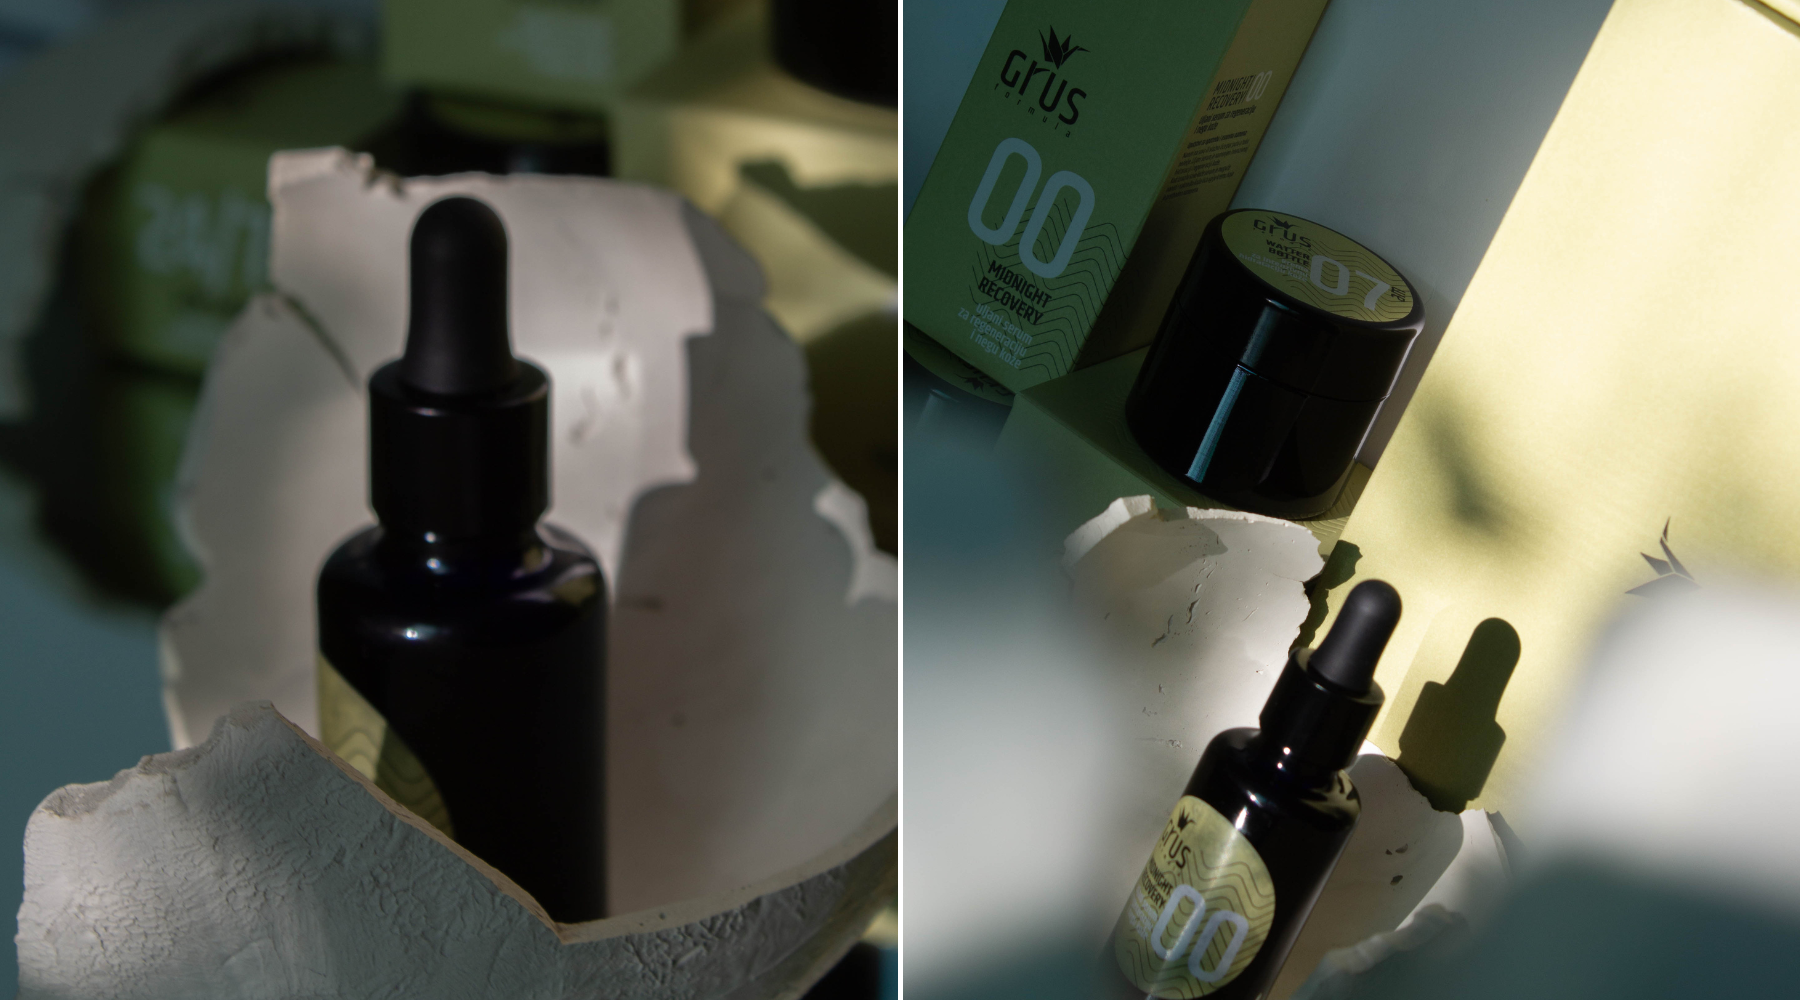 Beauty Insider: Nova veganska kozmetika inspirisana uljem od koštica grožđa – Grus formula